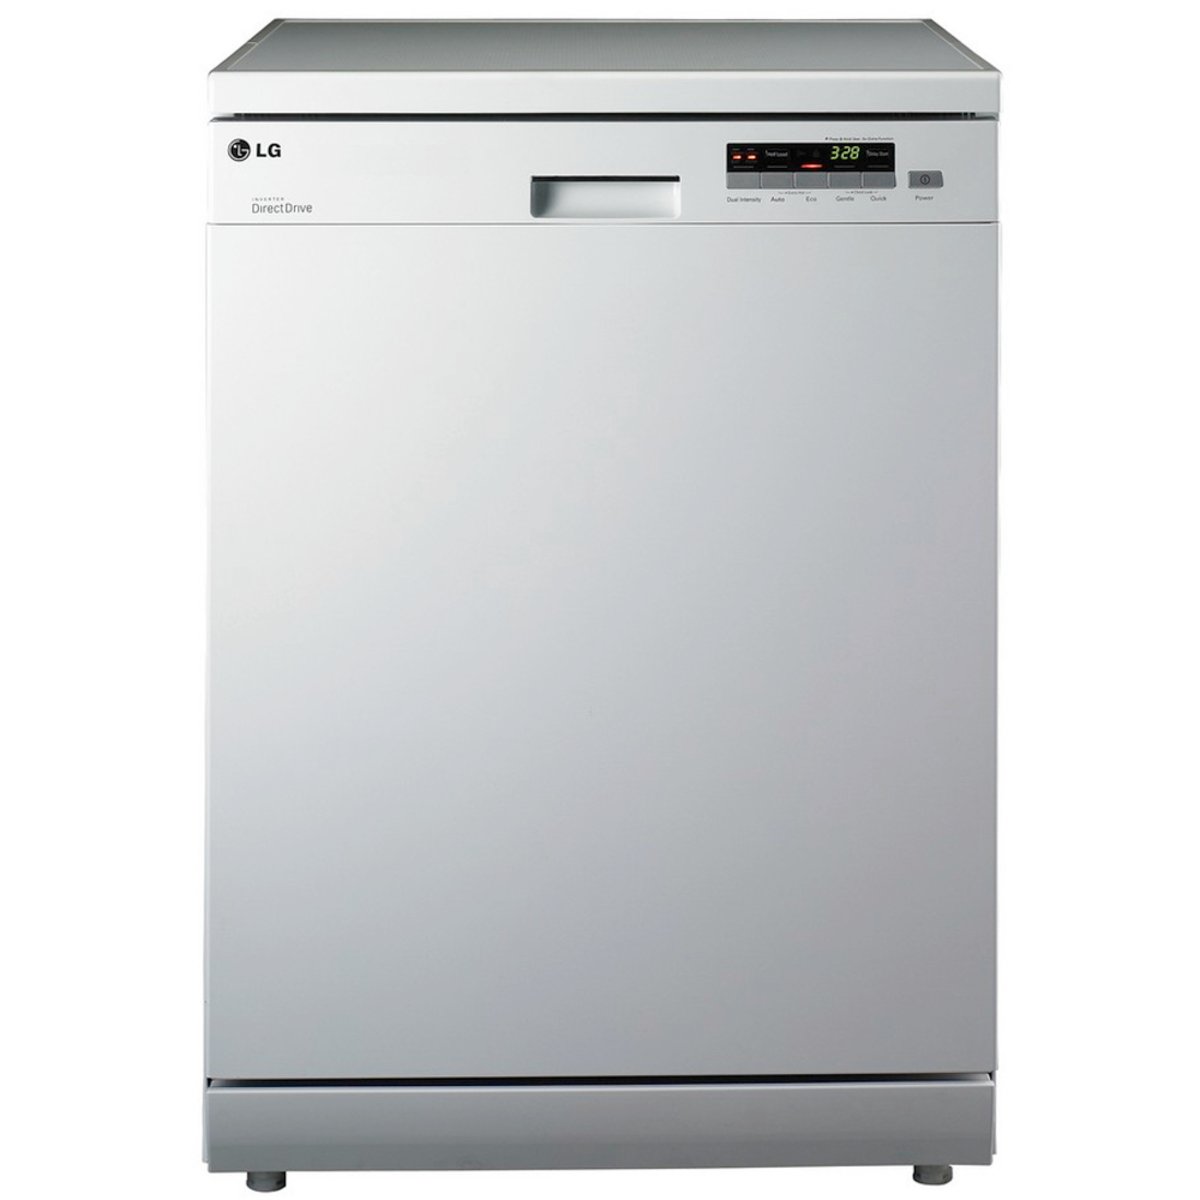 LG Dishwasher D1450WF 5 Programs